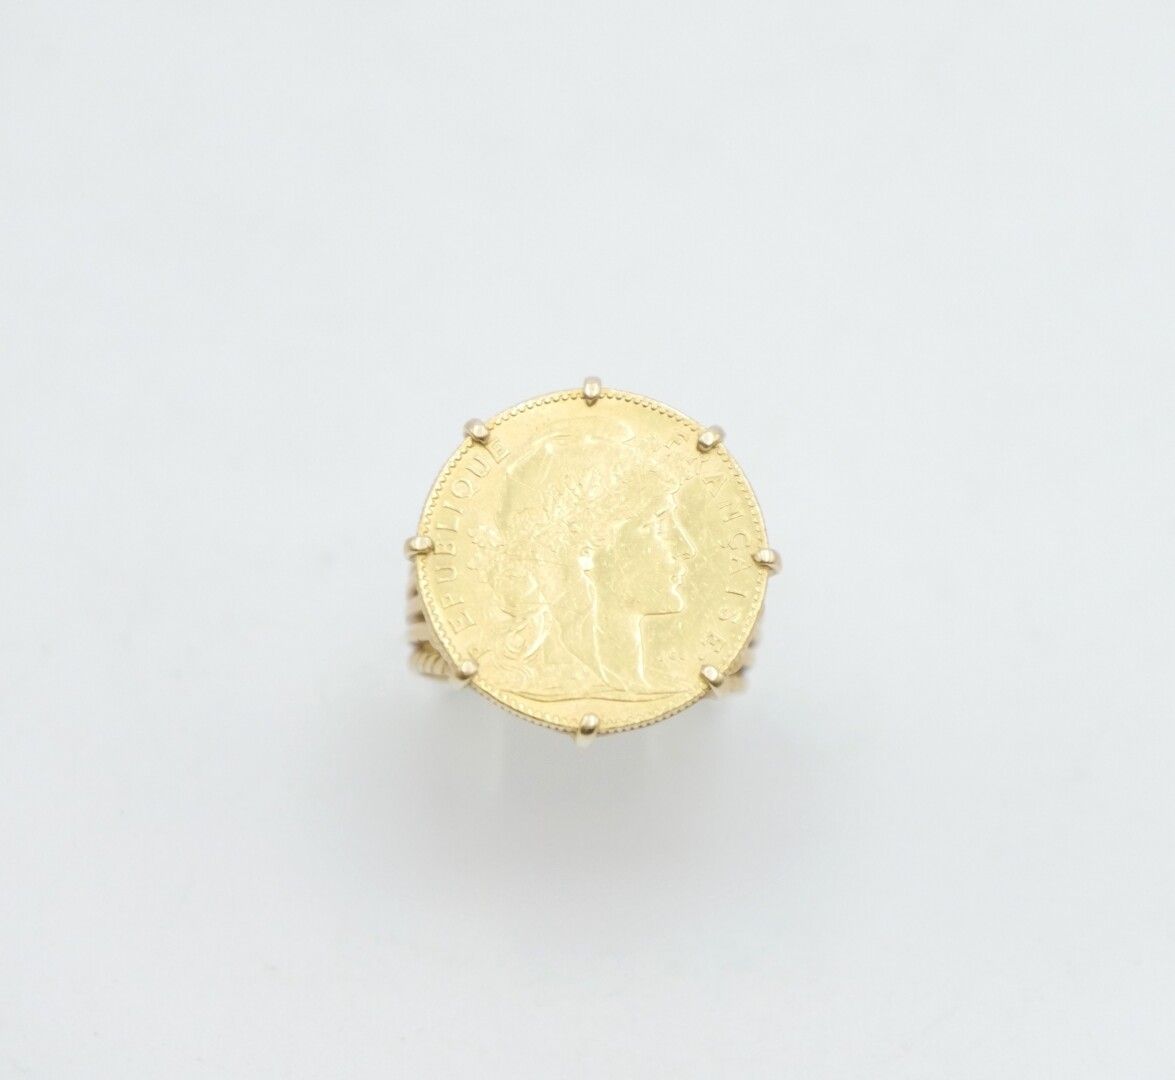 Null 法国 - 20世纪

镶嵌在戒指中的10法郎马里亚纳金币，镂空的黄金镶嵌750/1000e

总重量：9,4克。

手指大小：53

划痕，磨损状况